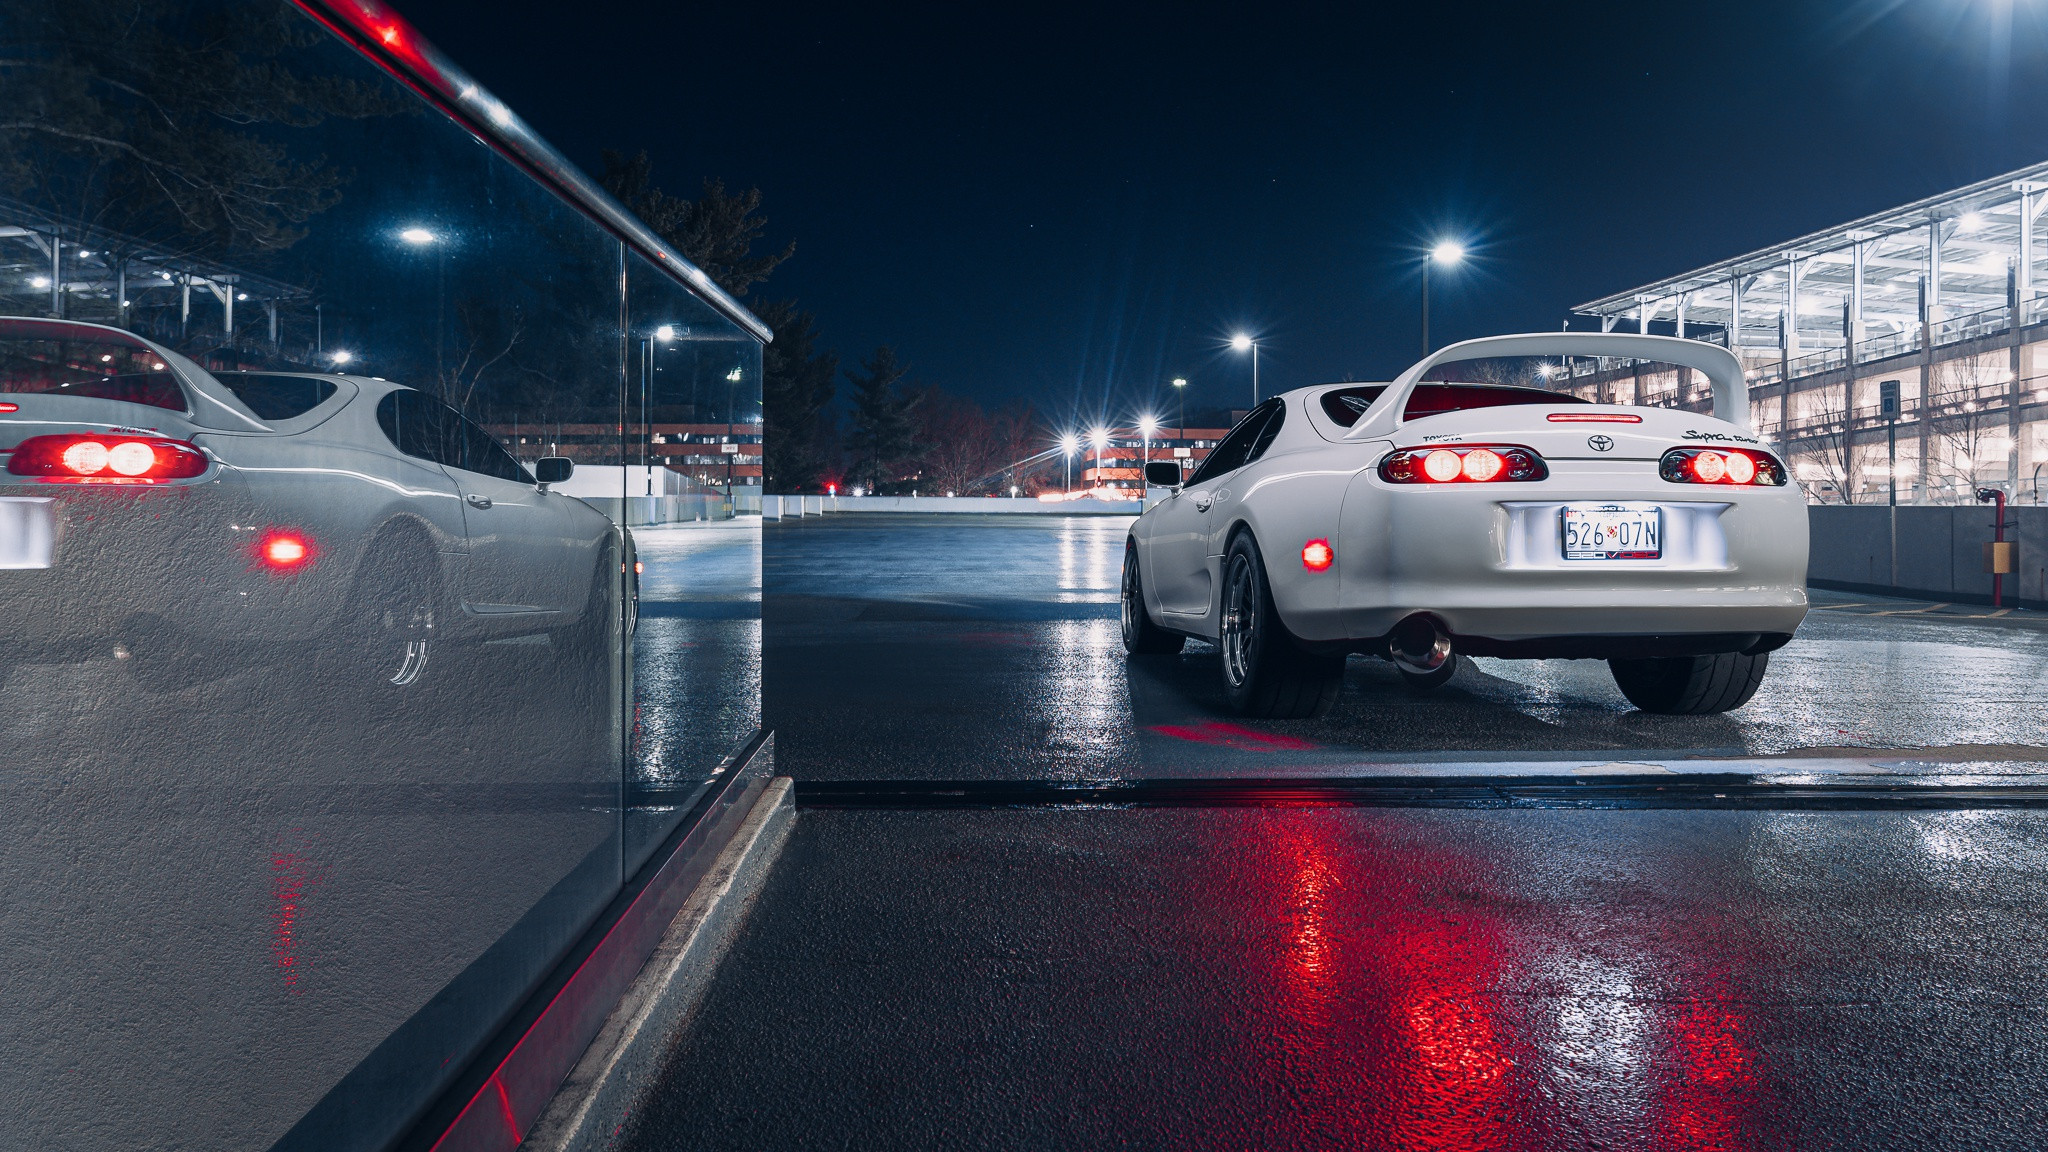 Free photo White Toyota Supra outside a mall at night